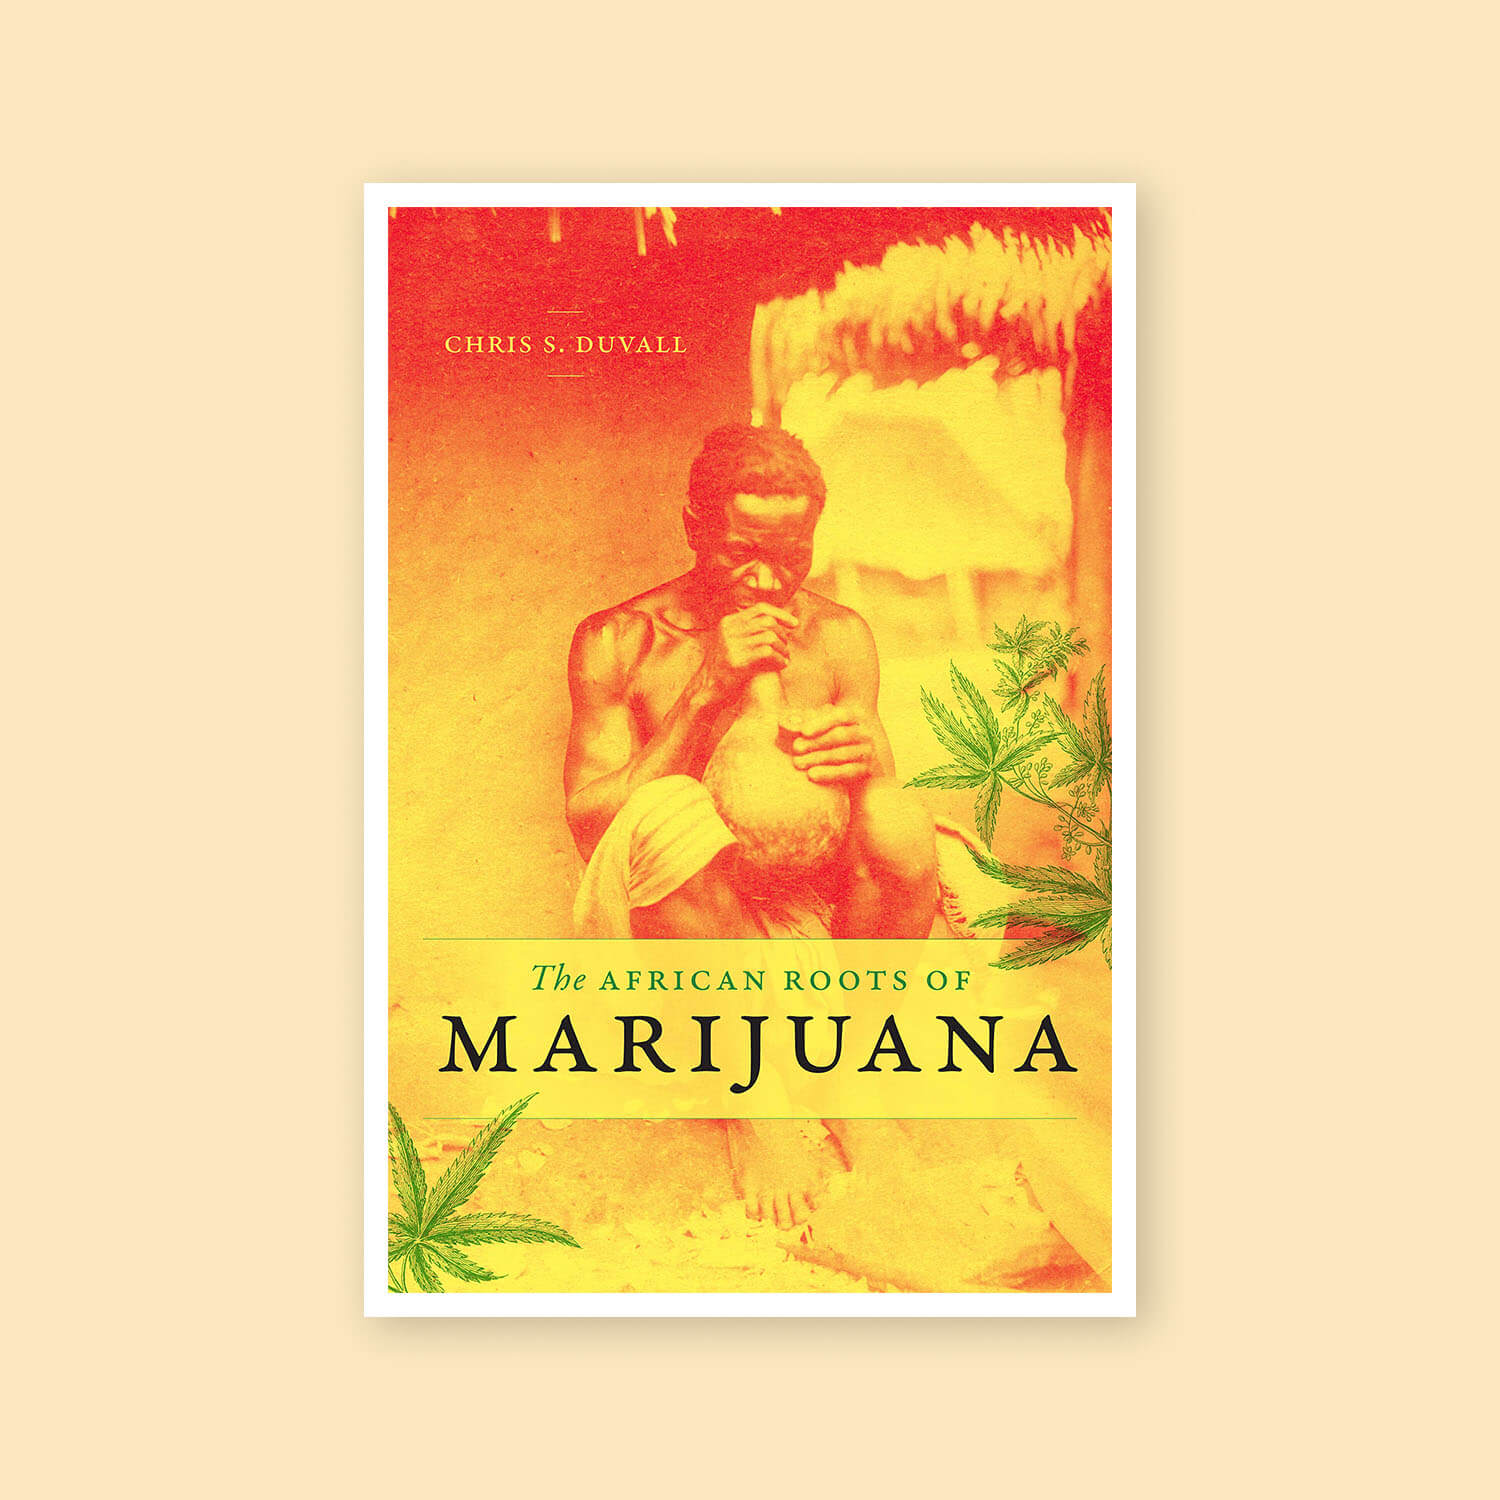 The African roots of marijuana